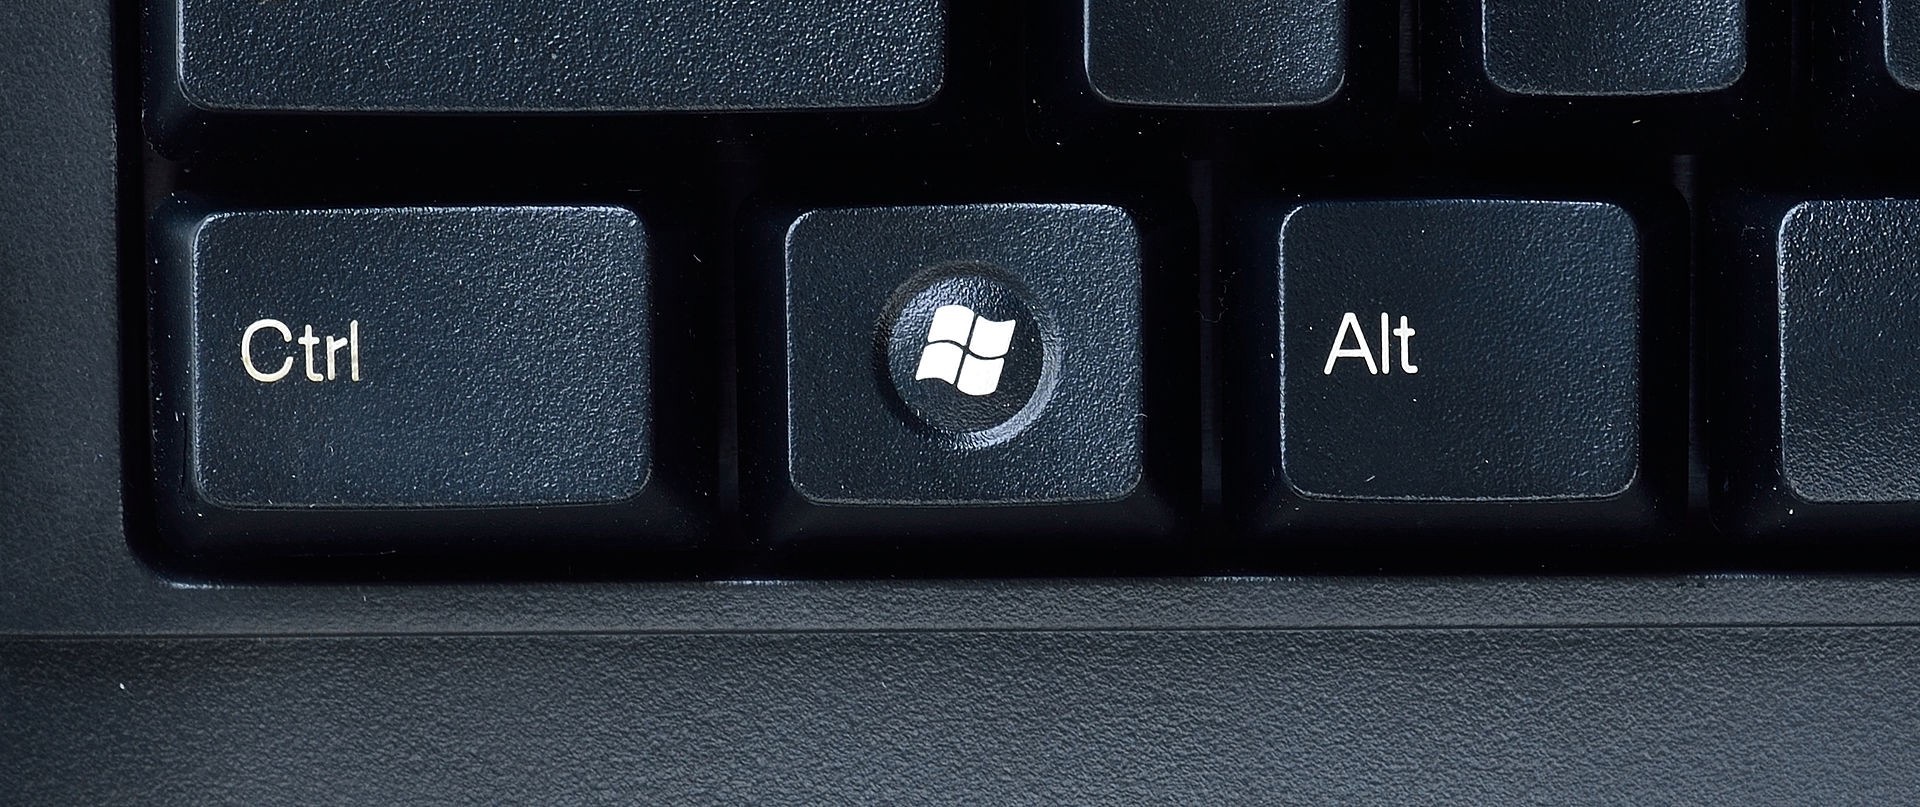 Как выглядит кнопка command на клавиатуре windows